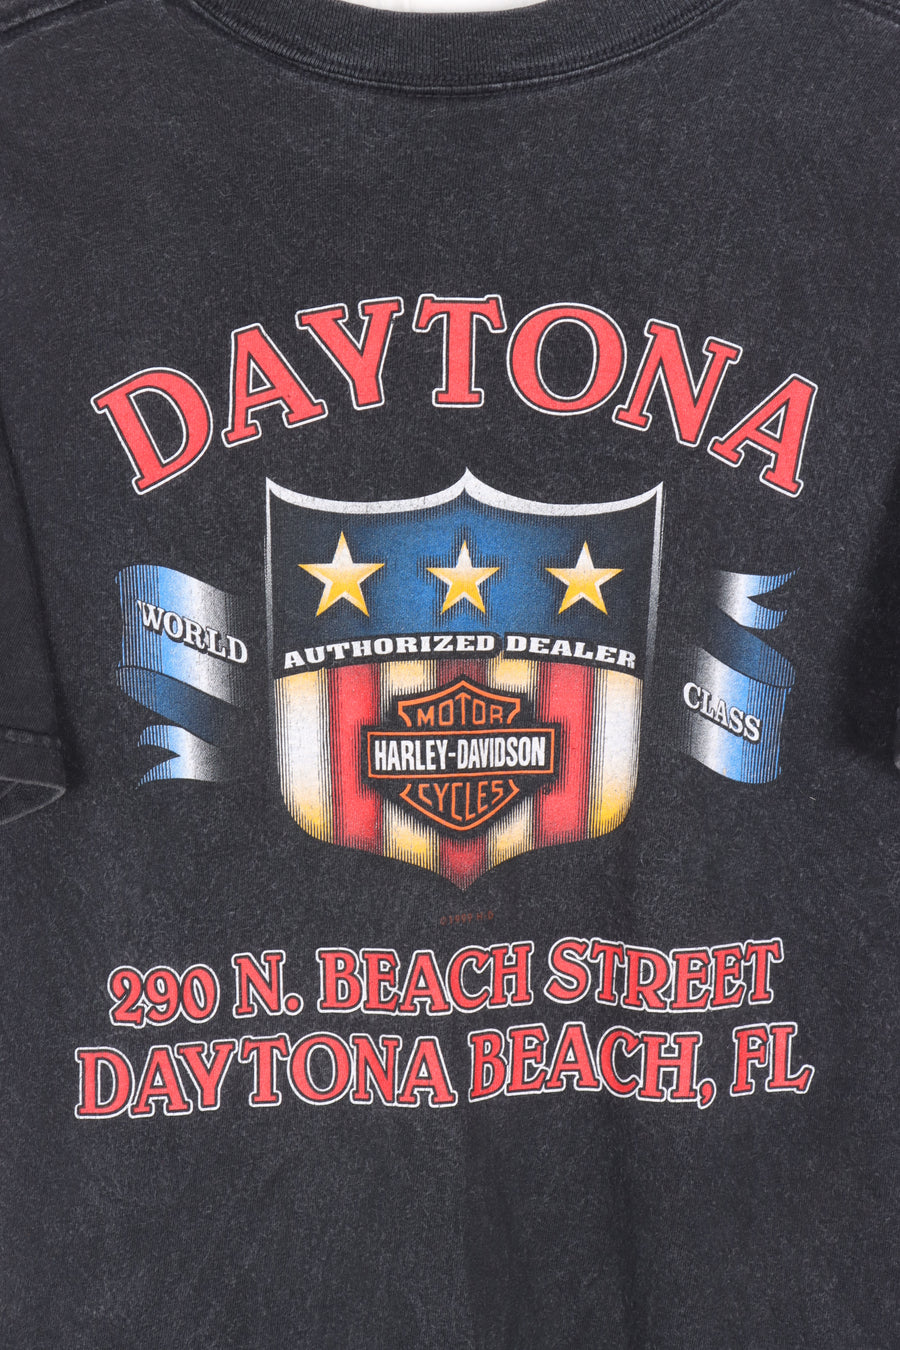 HARLEY DAVIDSON Eagle Fire Wings Daytona USA Made Flag Tee (M)